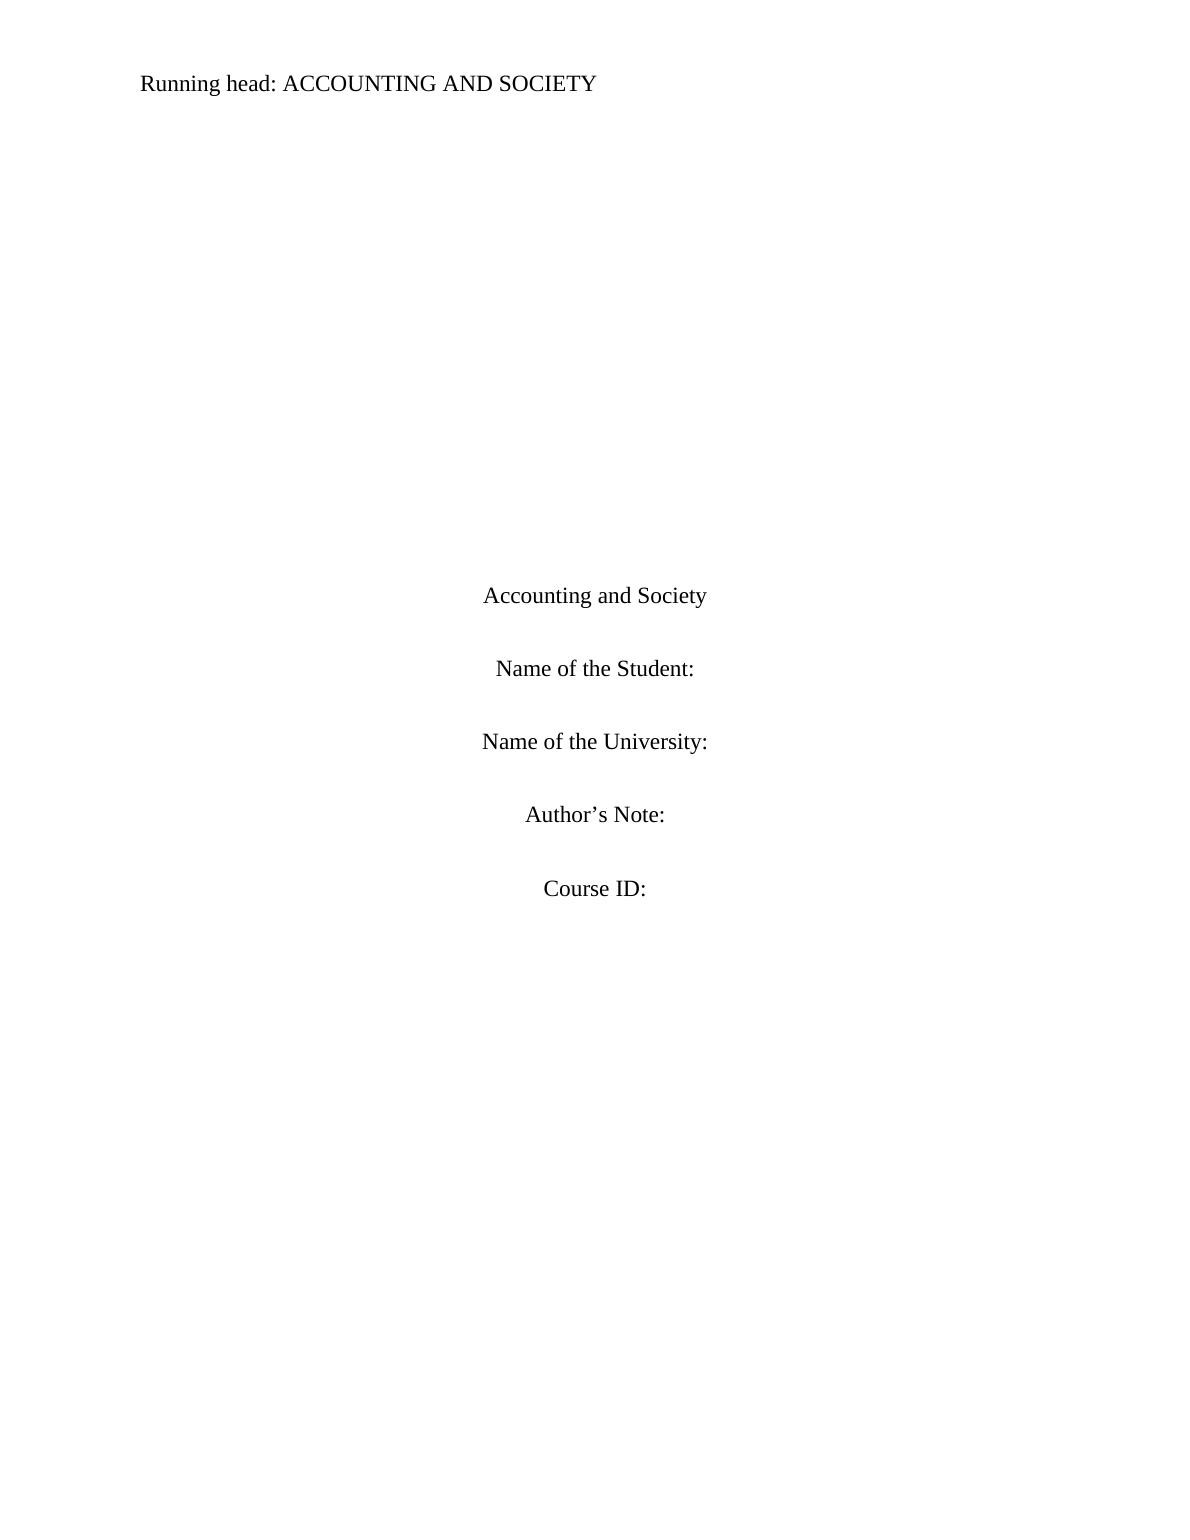 MAA310 - Accounting and society | Report_1